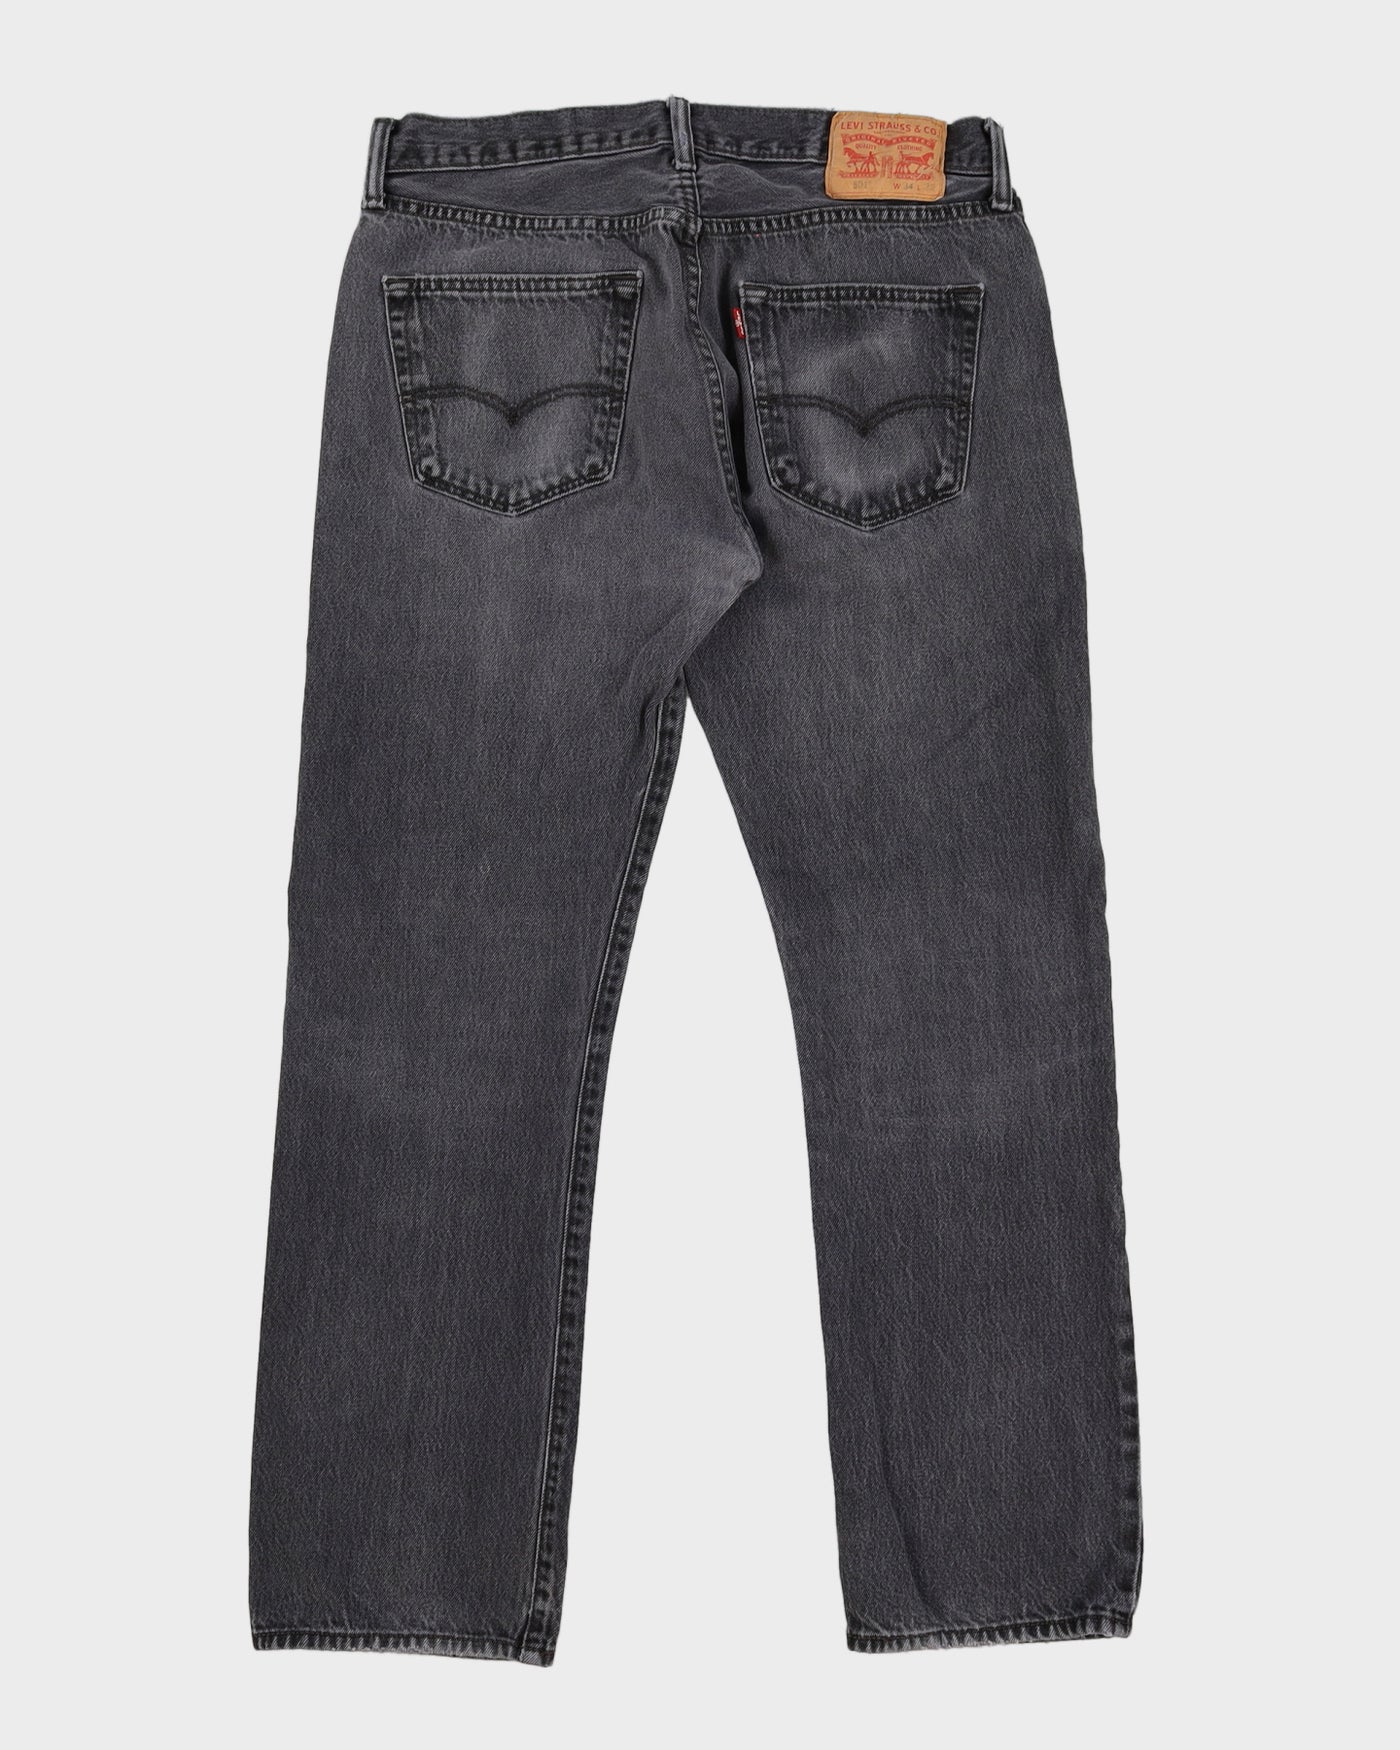 Levi's 501 Dark Grey Jeans - W33 L30